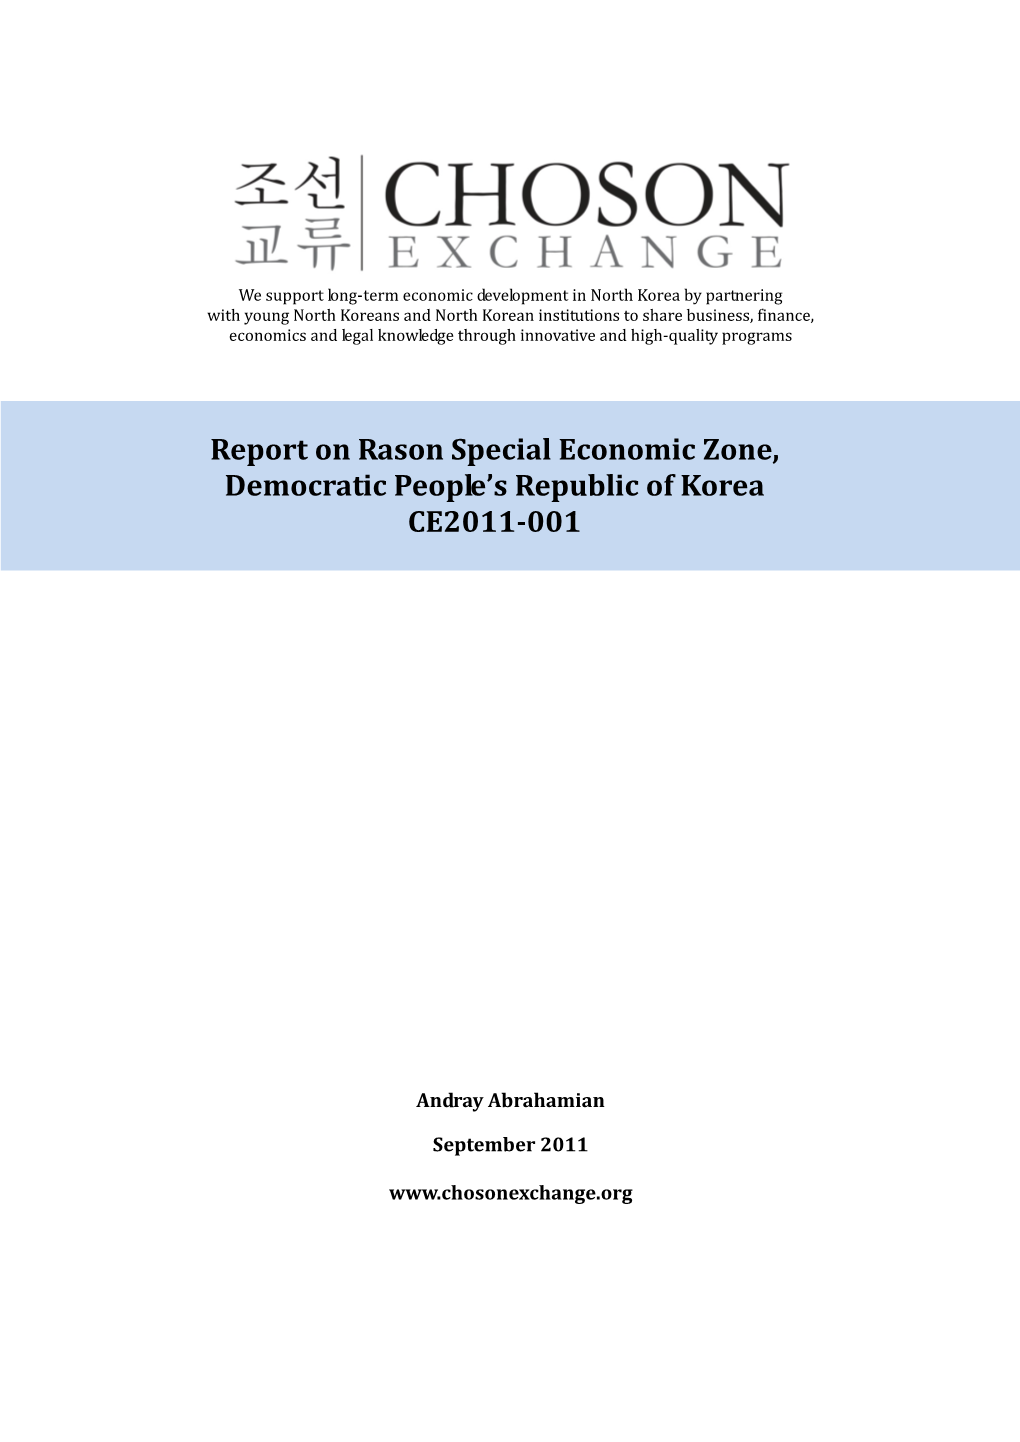 Report on Rason Special Economic Zone, Democratic People's Republic of Korea CE2011-001